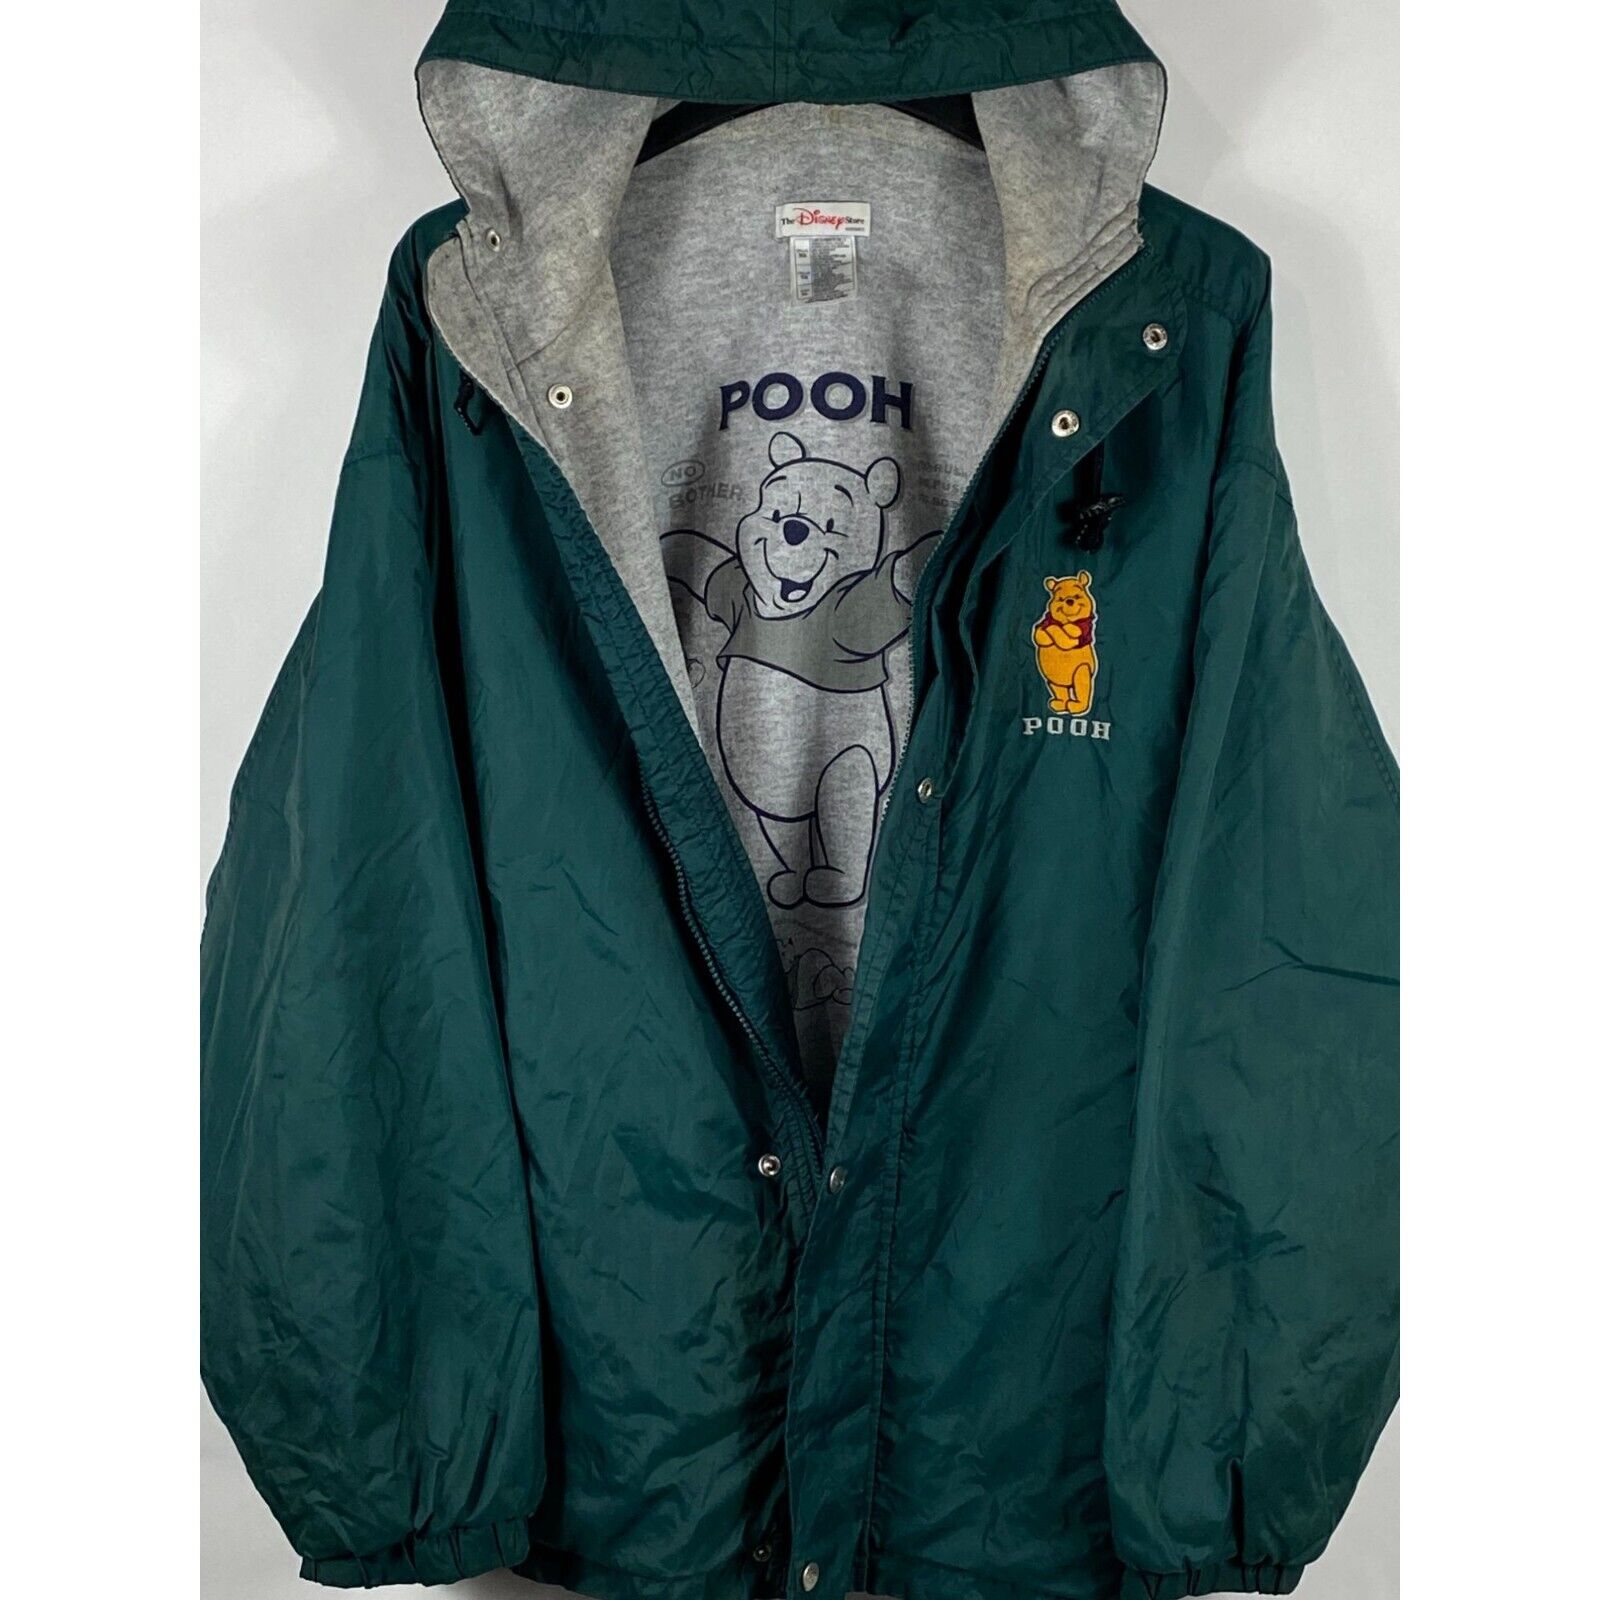 Vintage Disney Store Winnie The Pooh Parka Windbreaker Jacket Green XL E92